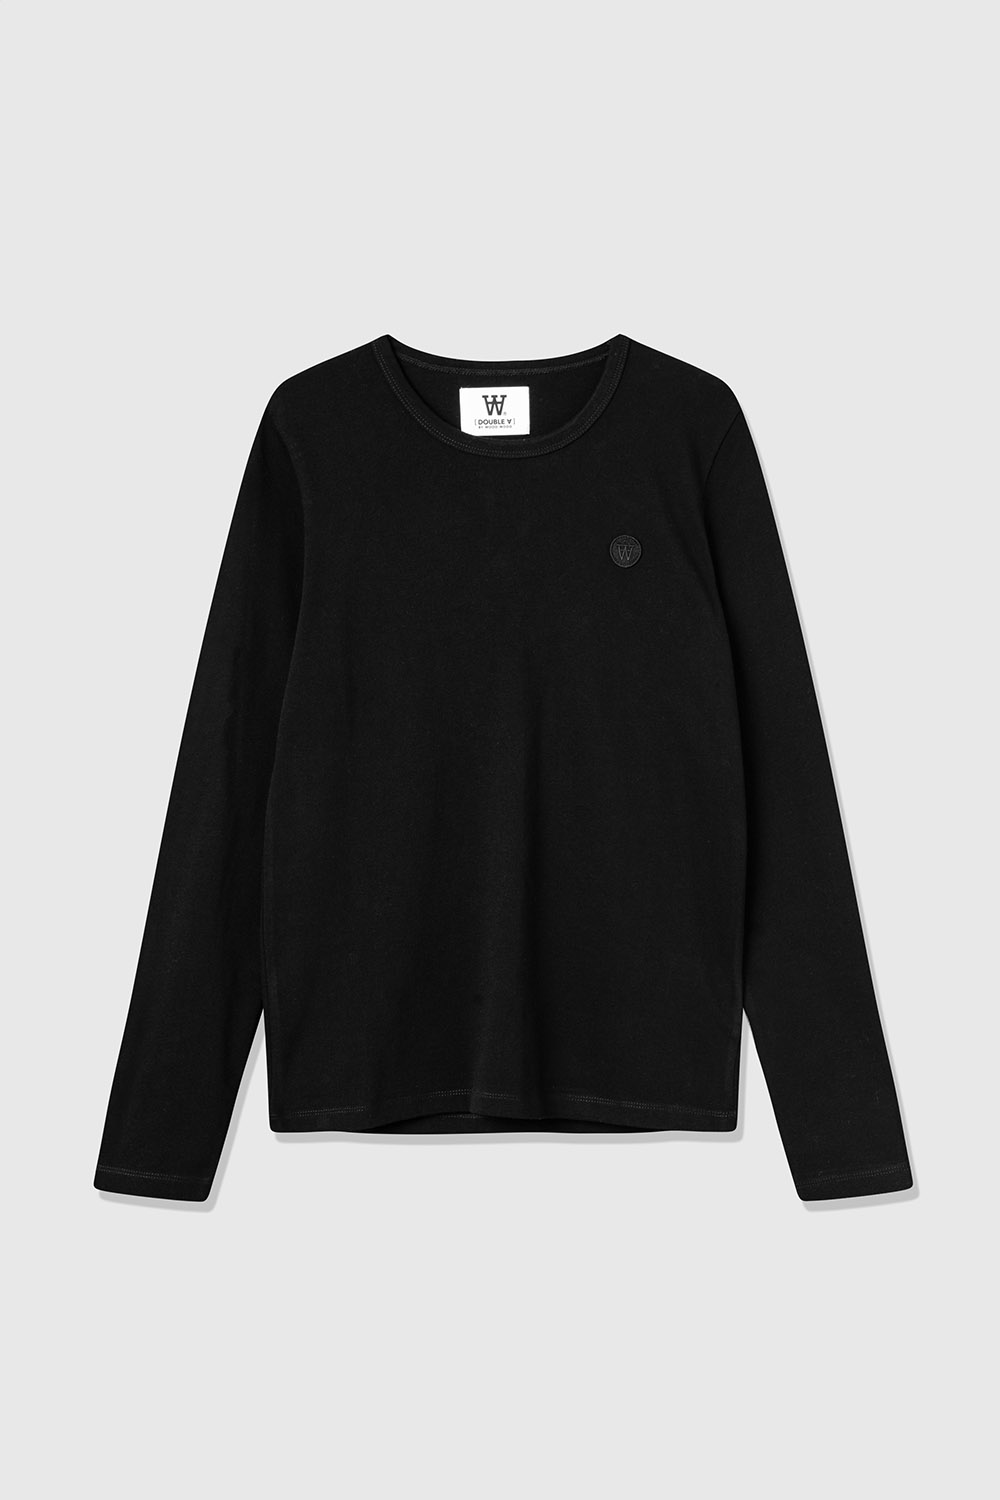 Organic Cotton MOA Long Sleeve Black Dress Shirts, Island fashion